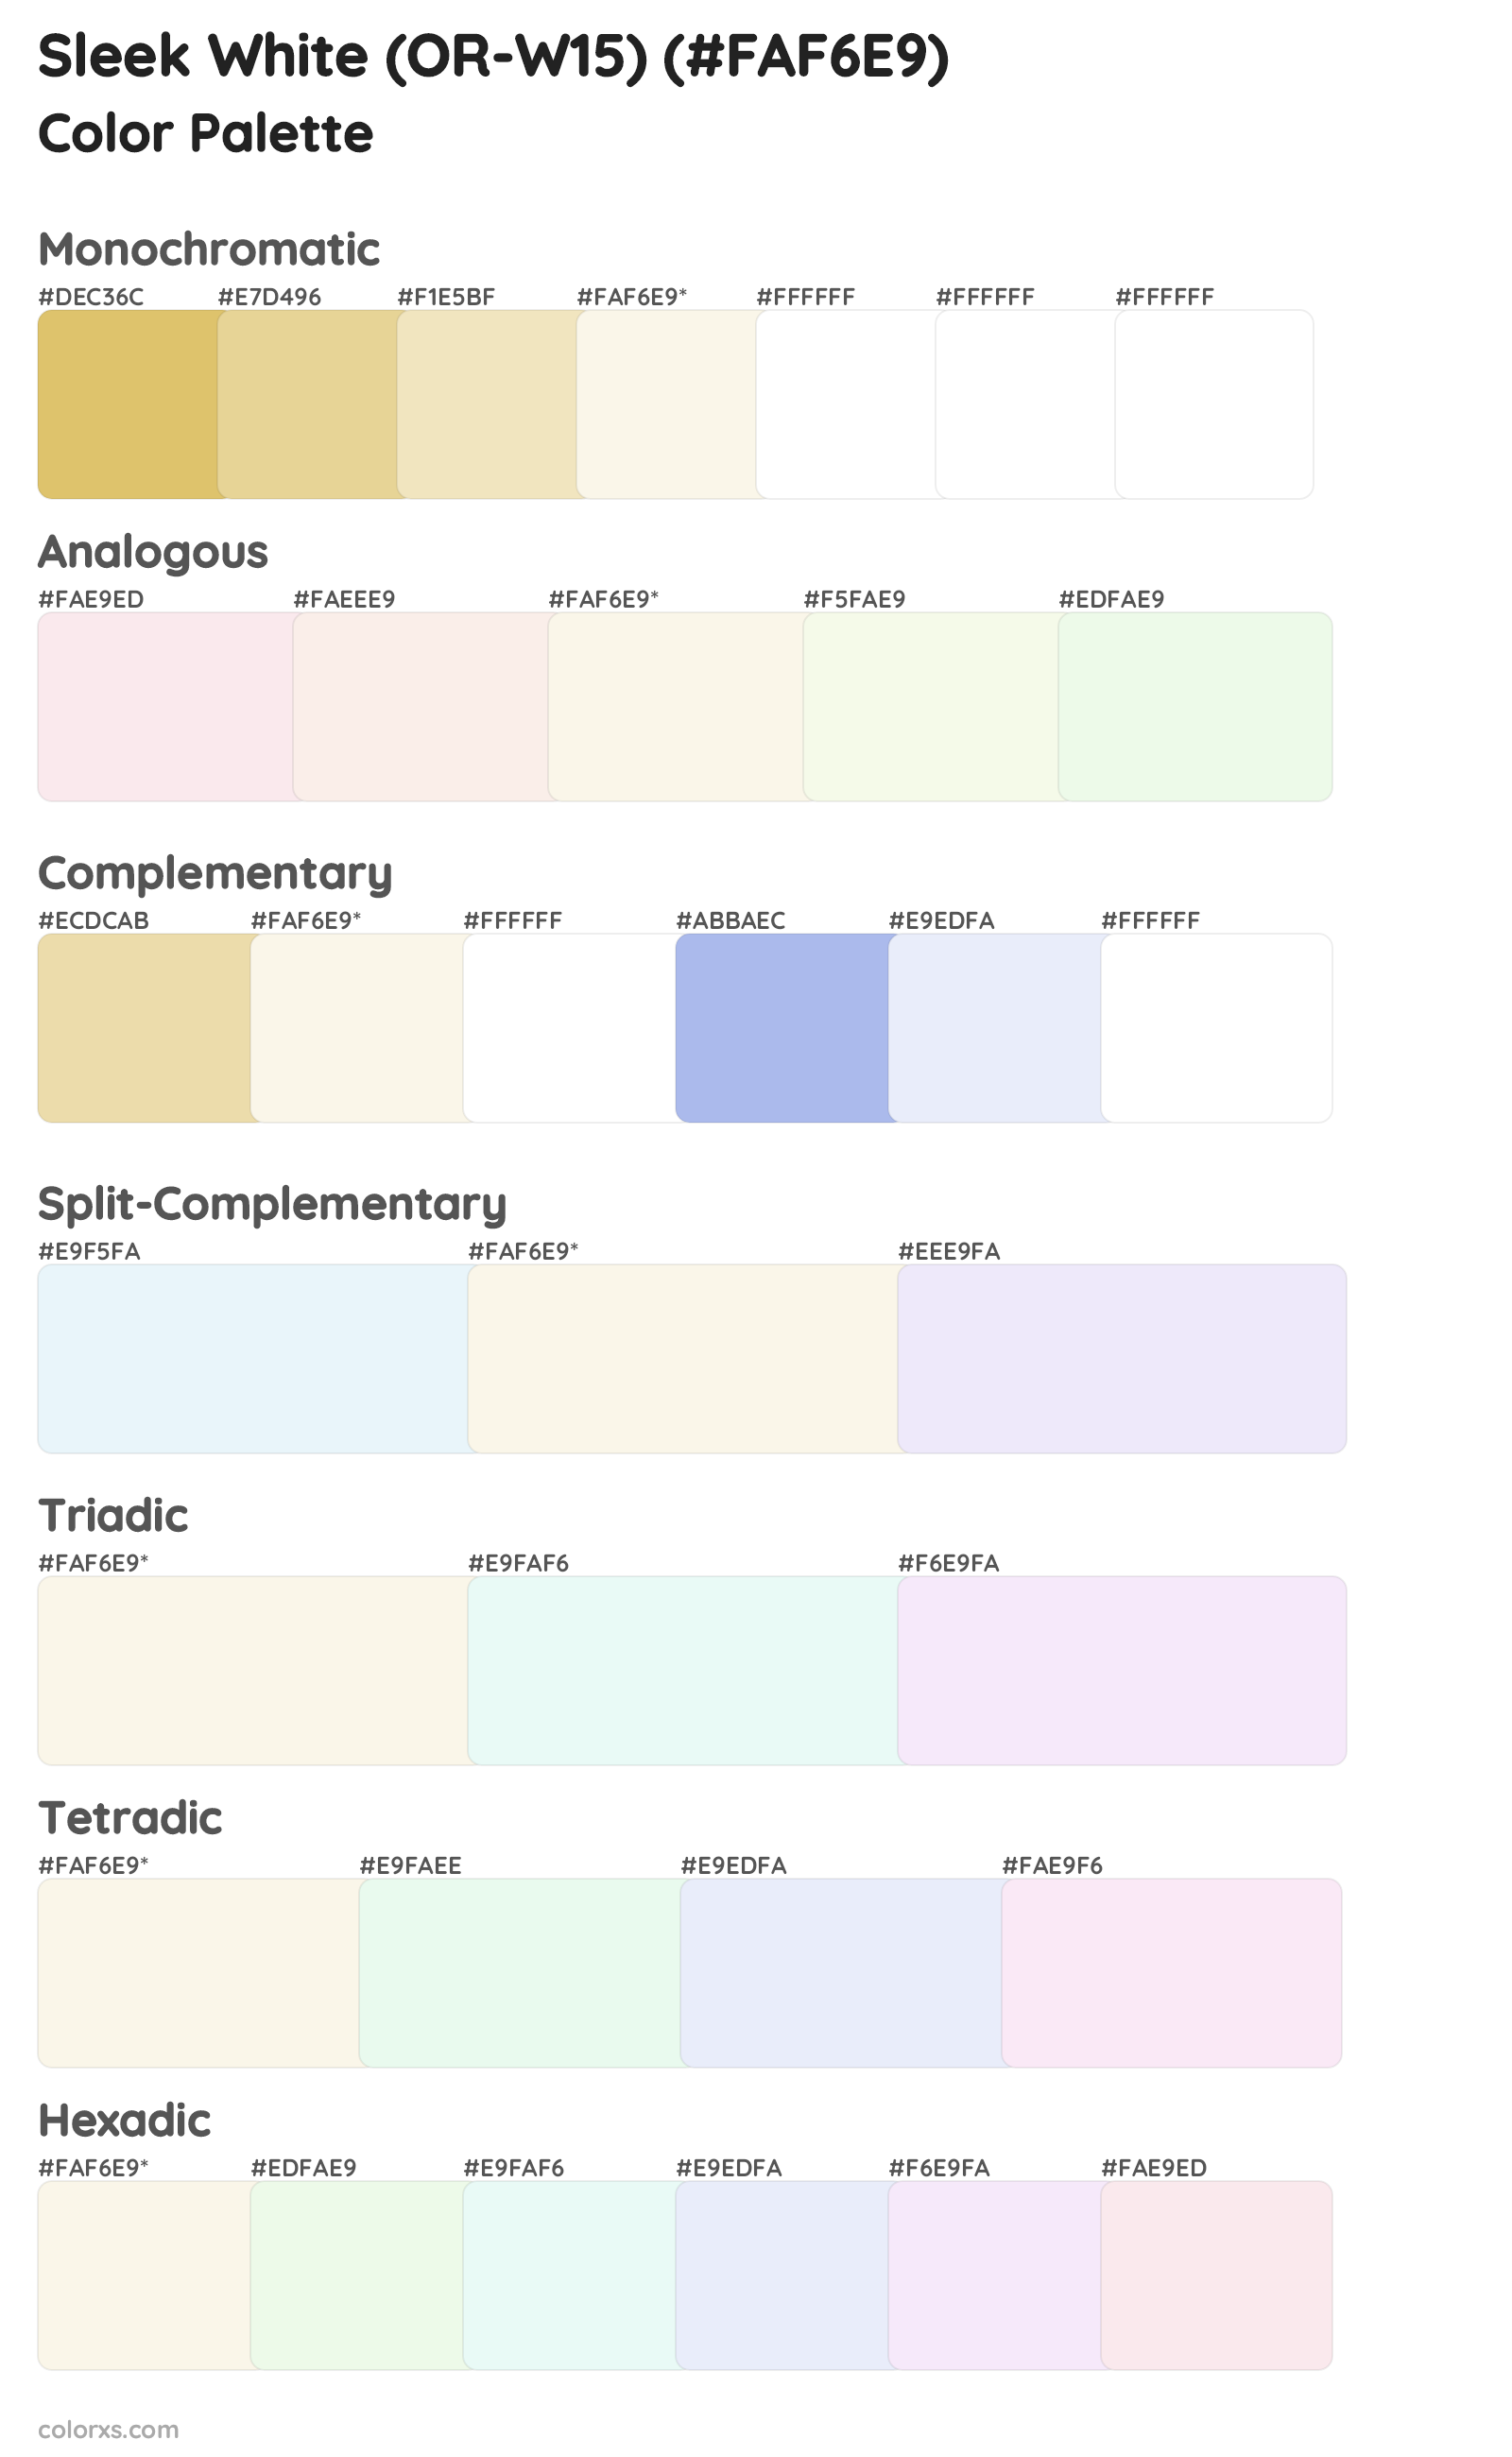 Sleek White (OR-W15) Color Scheme Palettes